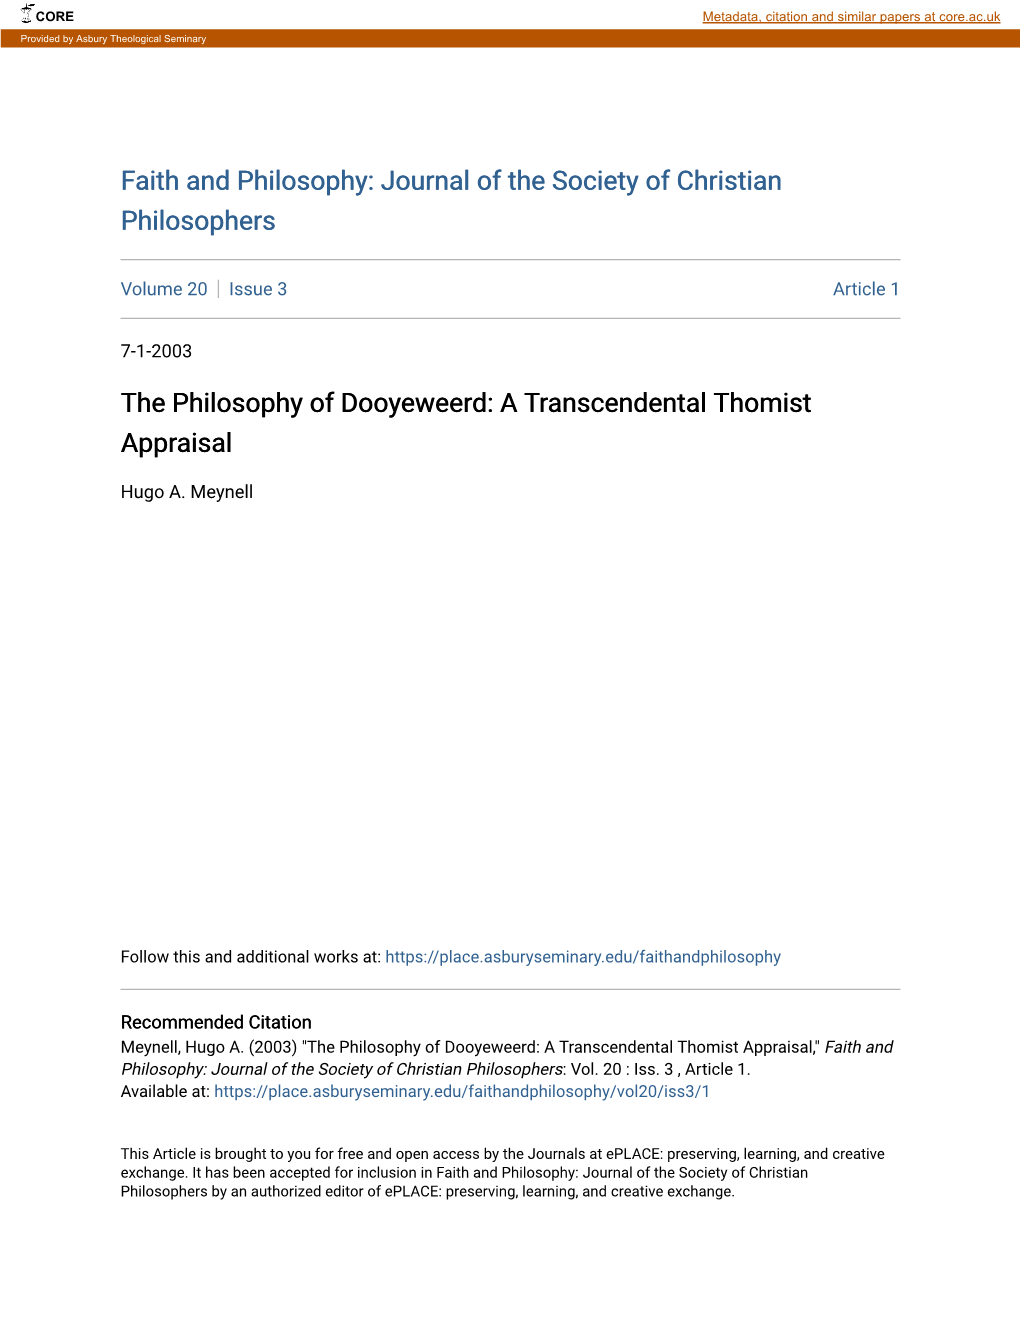 The Philosophy of Dooyeweerd: a Transcendental Thomist Appraisal